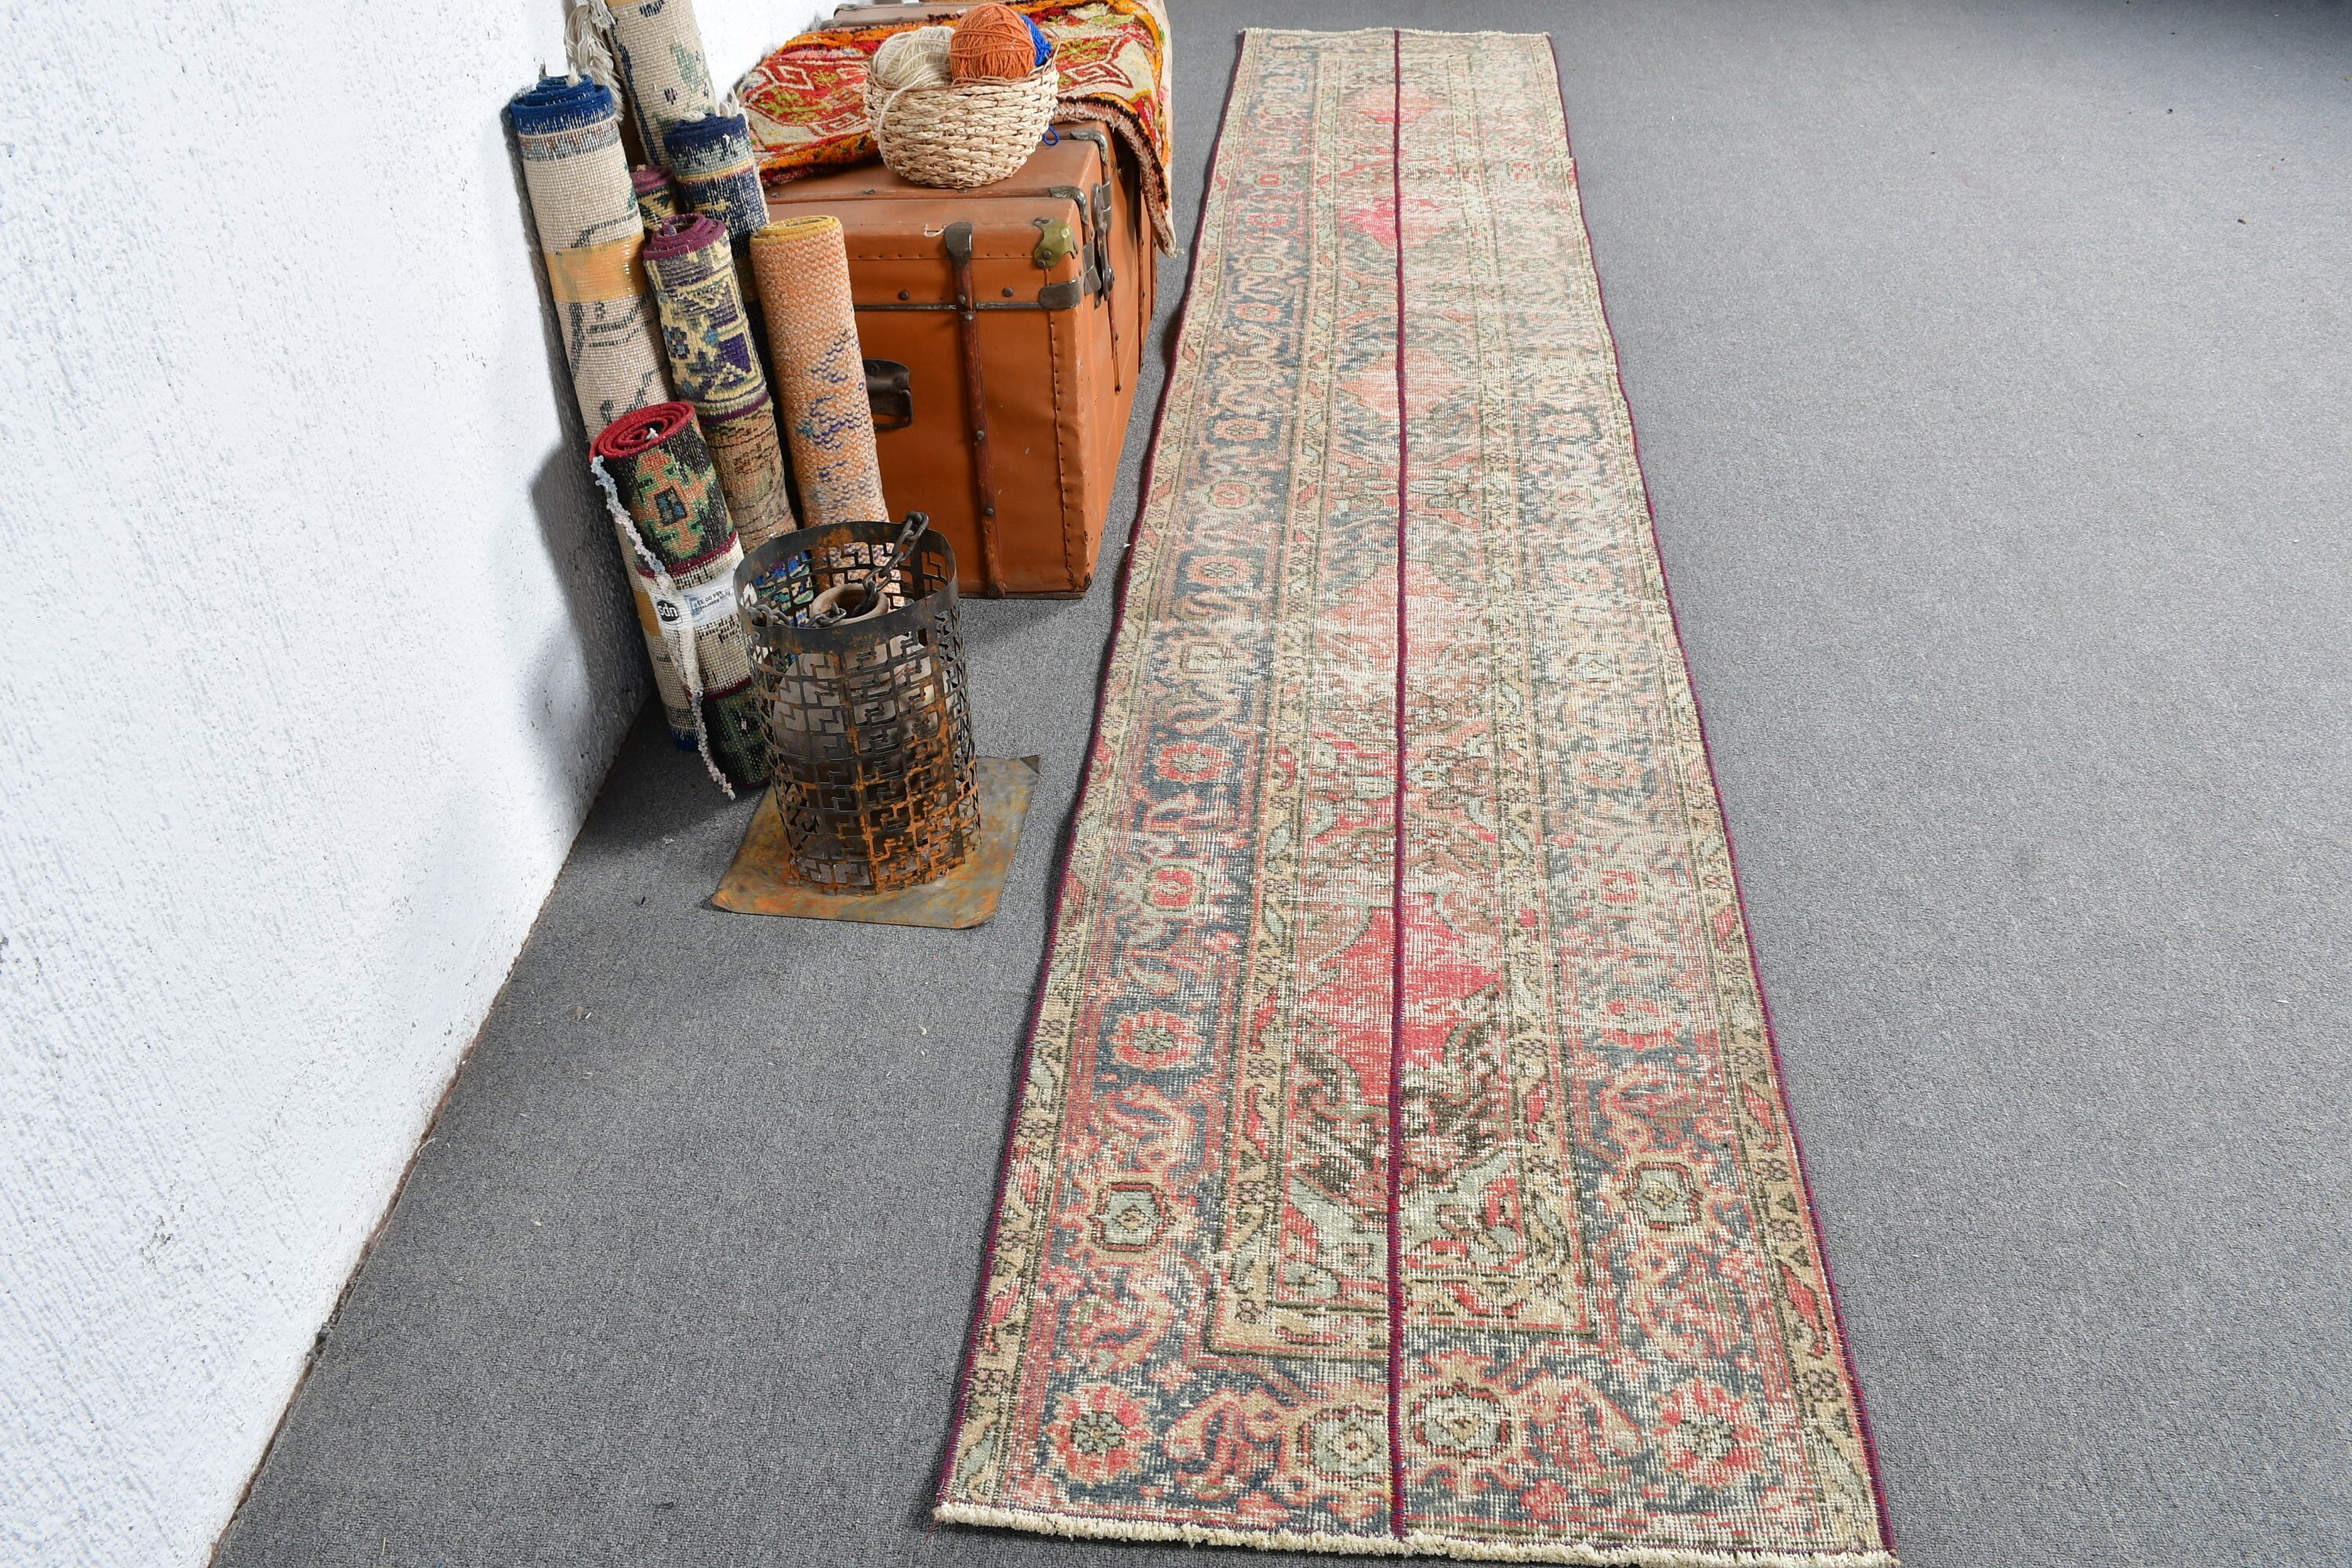 Corridor Rug, Red Kitchen Rugs, Wool Rugs, Vintage Rug, Rugs for Kitchen, Moroccan Rug, Hallway Rug, Turkish Rug, 2.3x12.8 ft Runner Rug